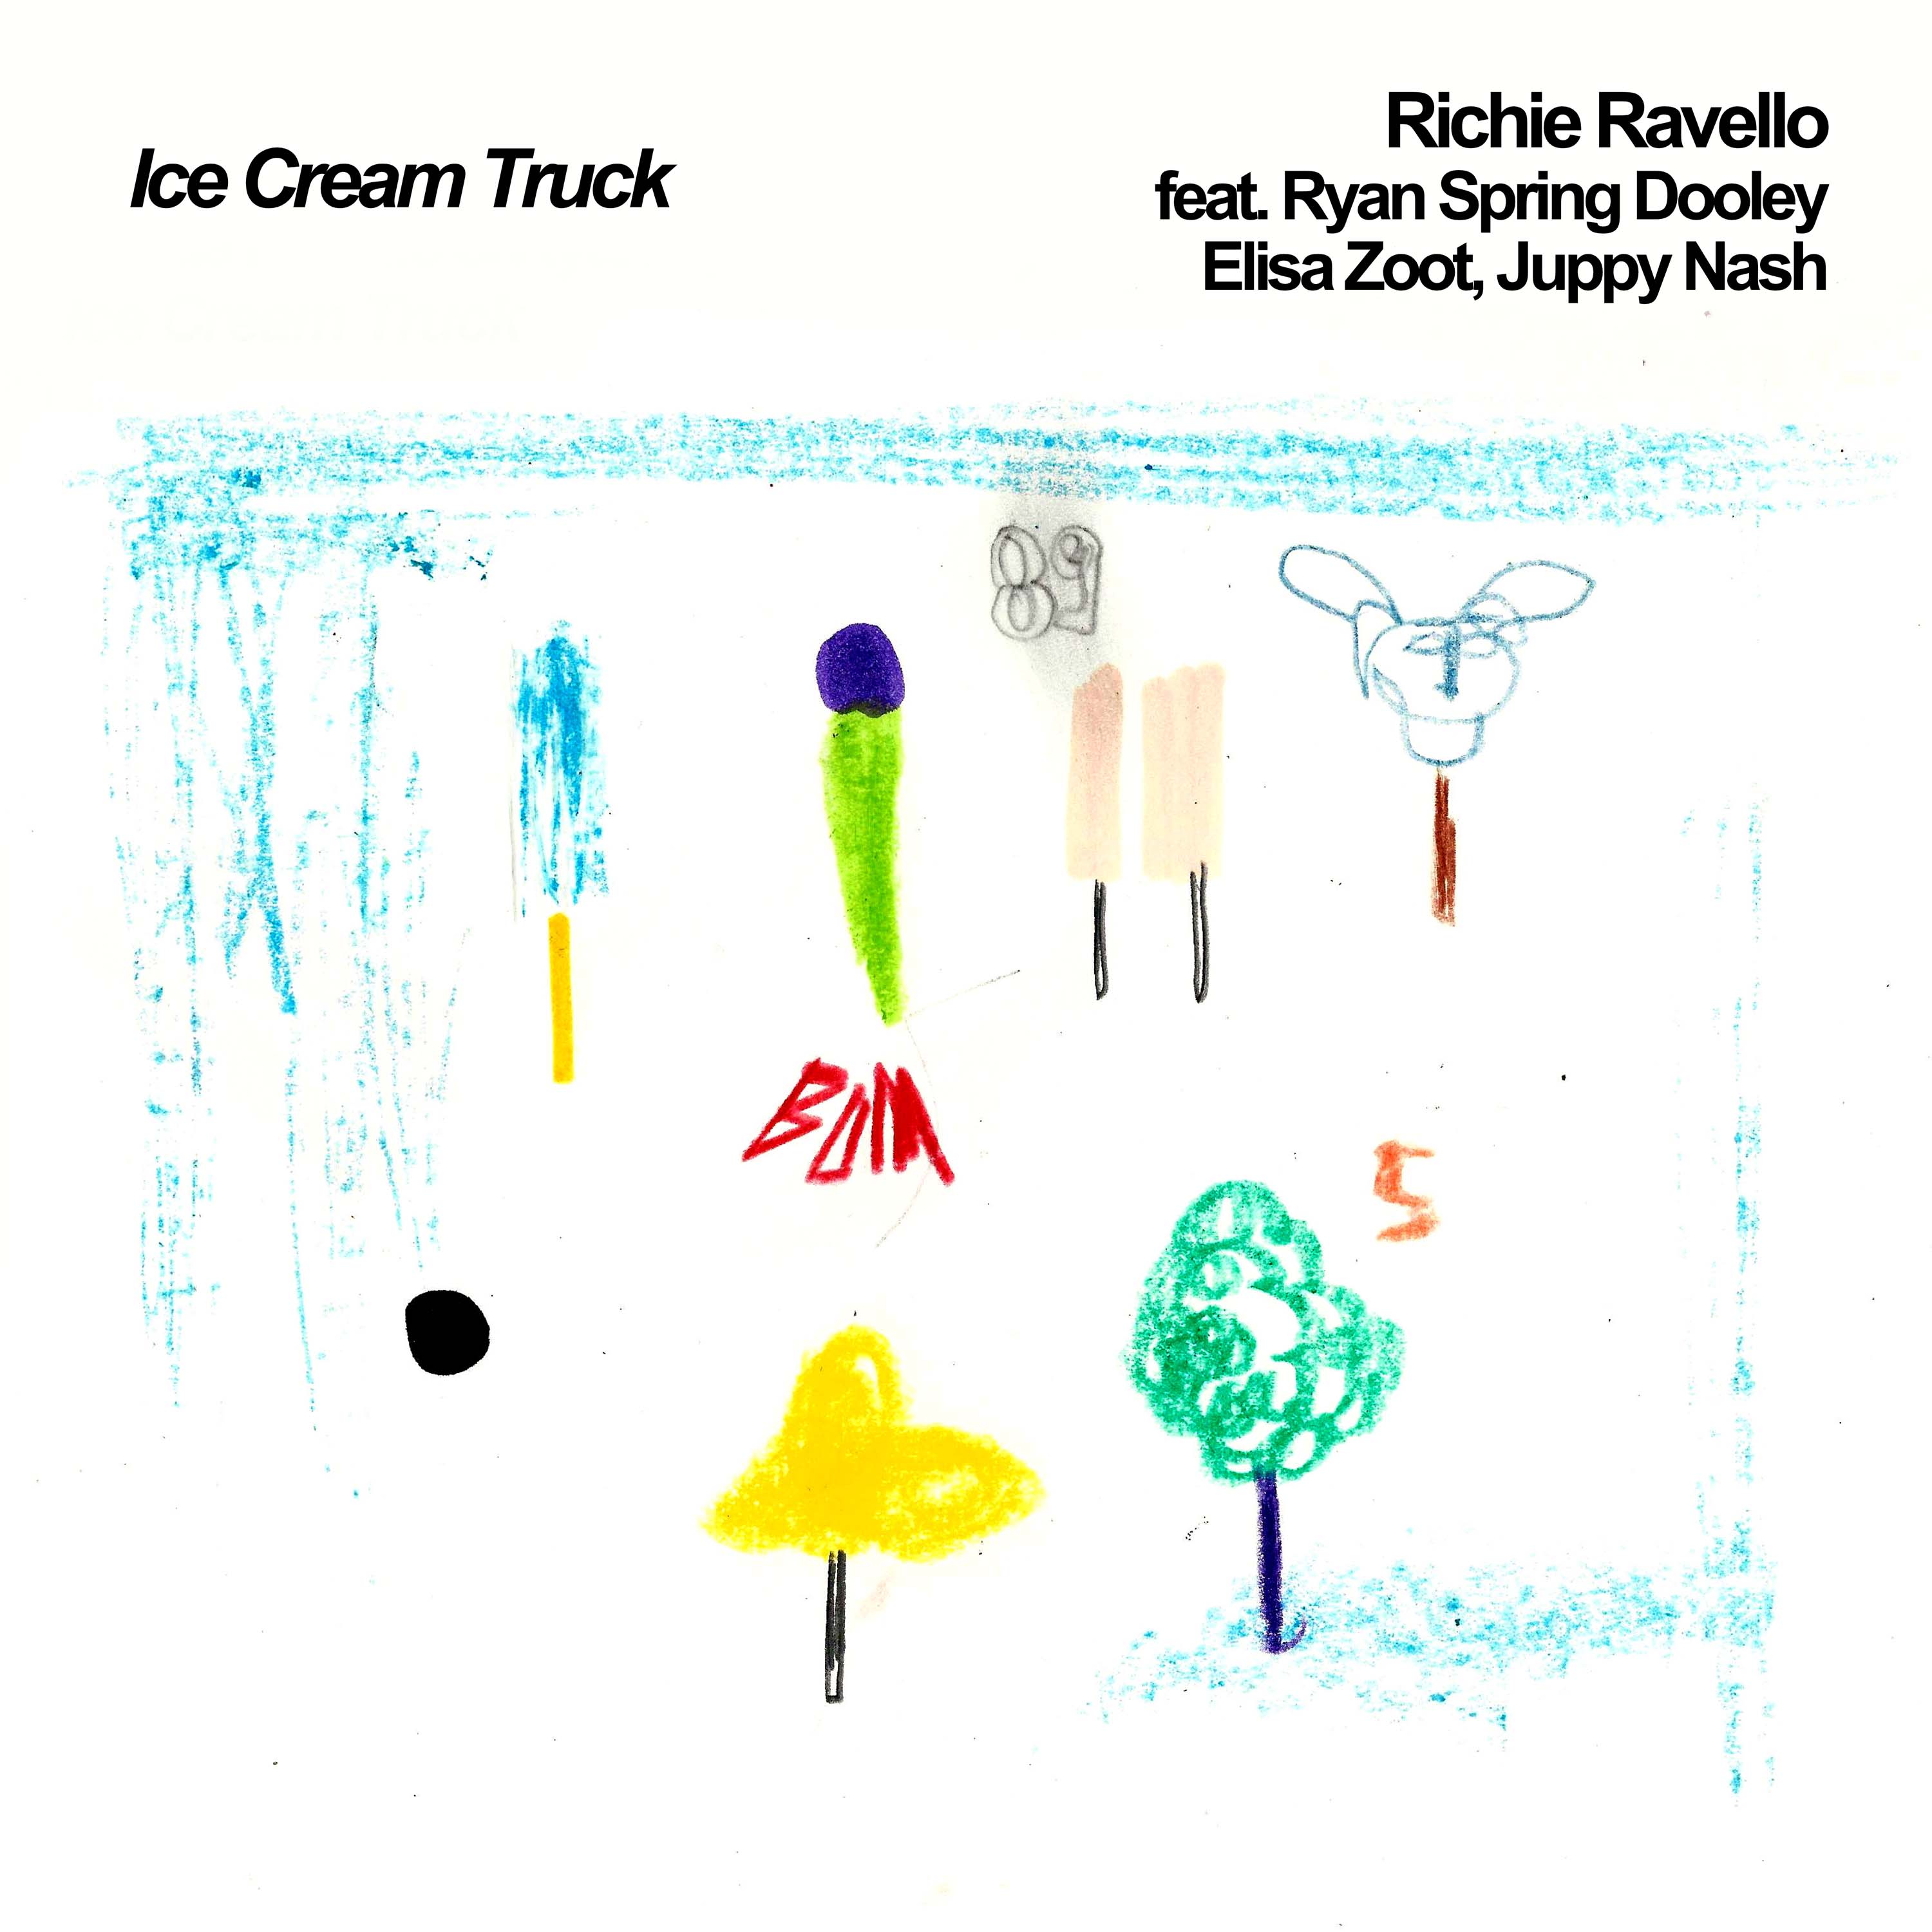 Richie Ravello feat. Ryan Spring Dooley, Elisa Zoot, Juppy Nash - Ice Cream Truck